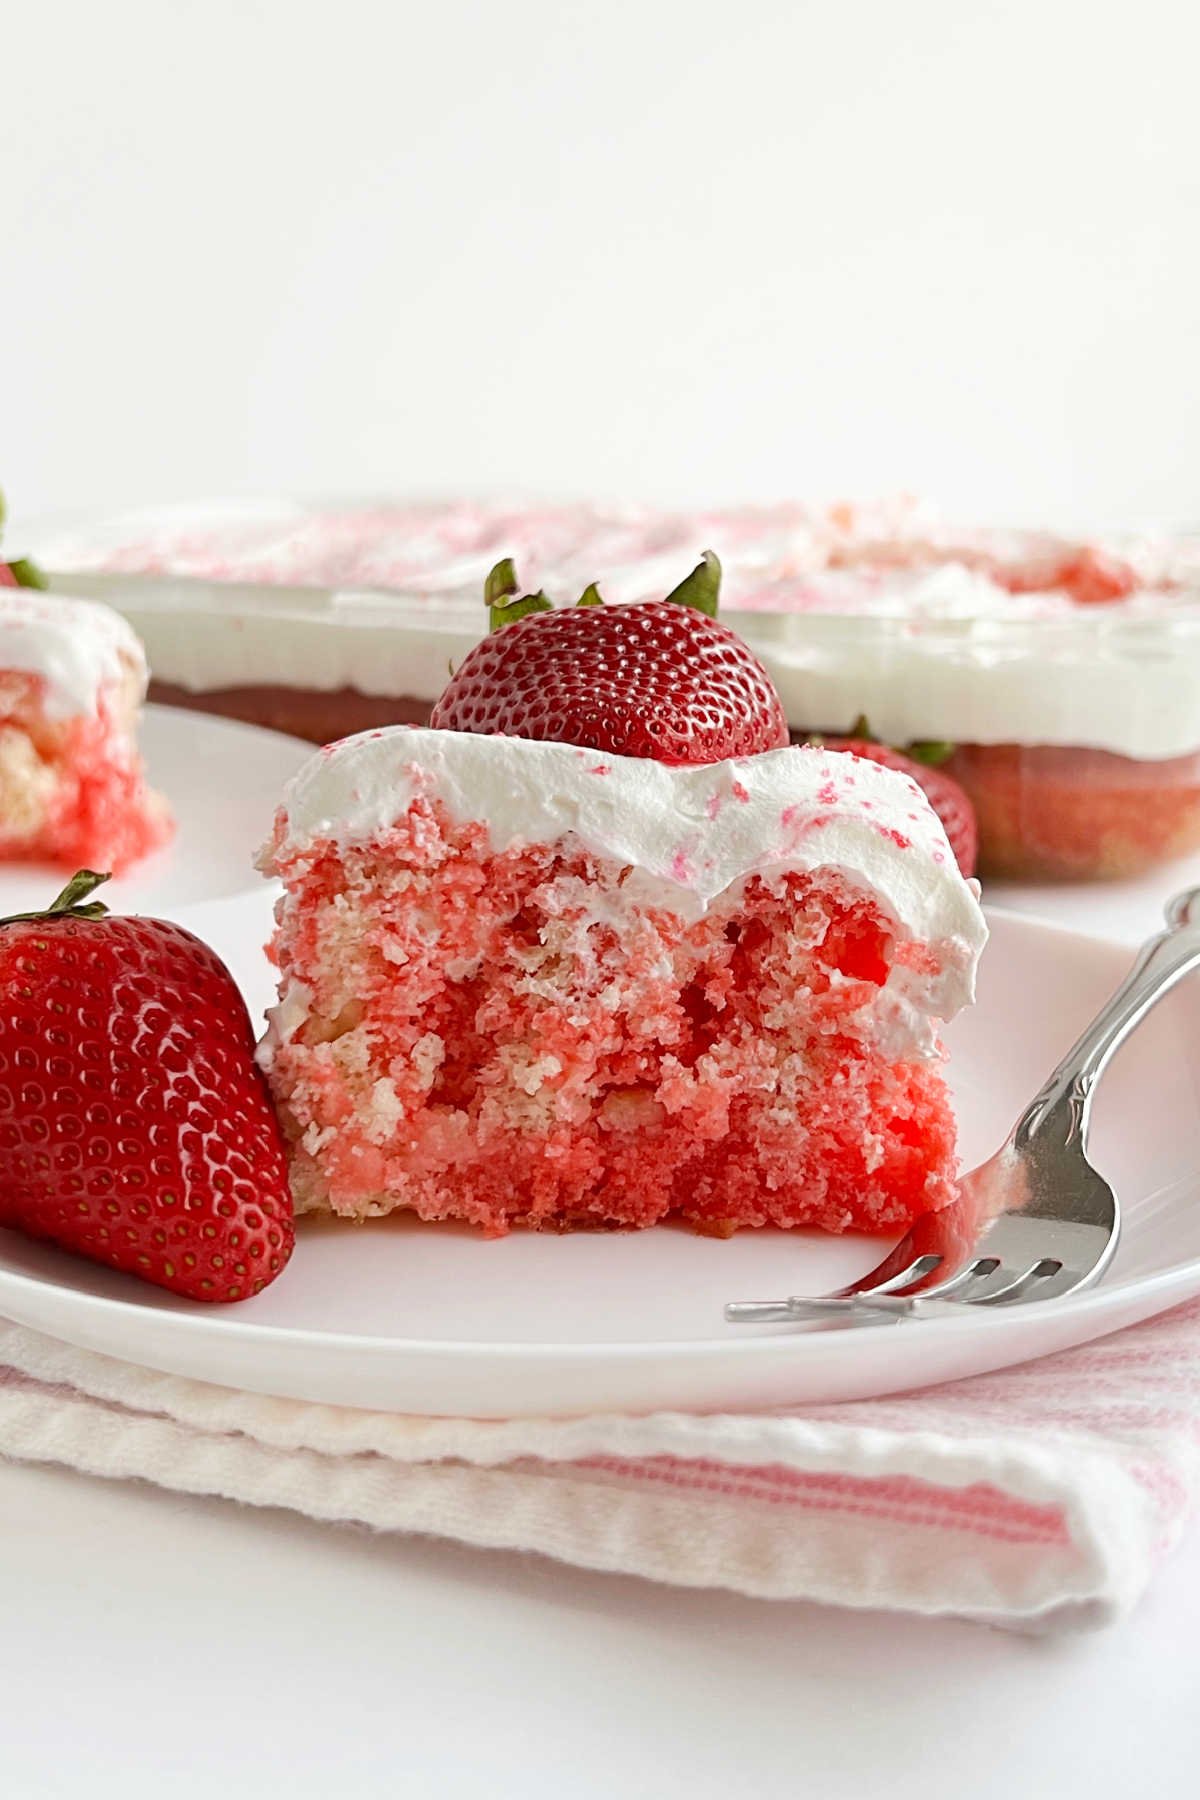 slice of strawberry jello poke cake with fresh strawberries on plate